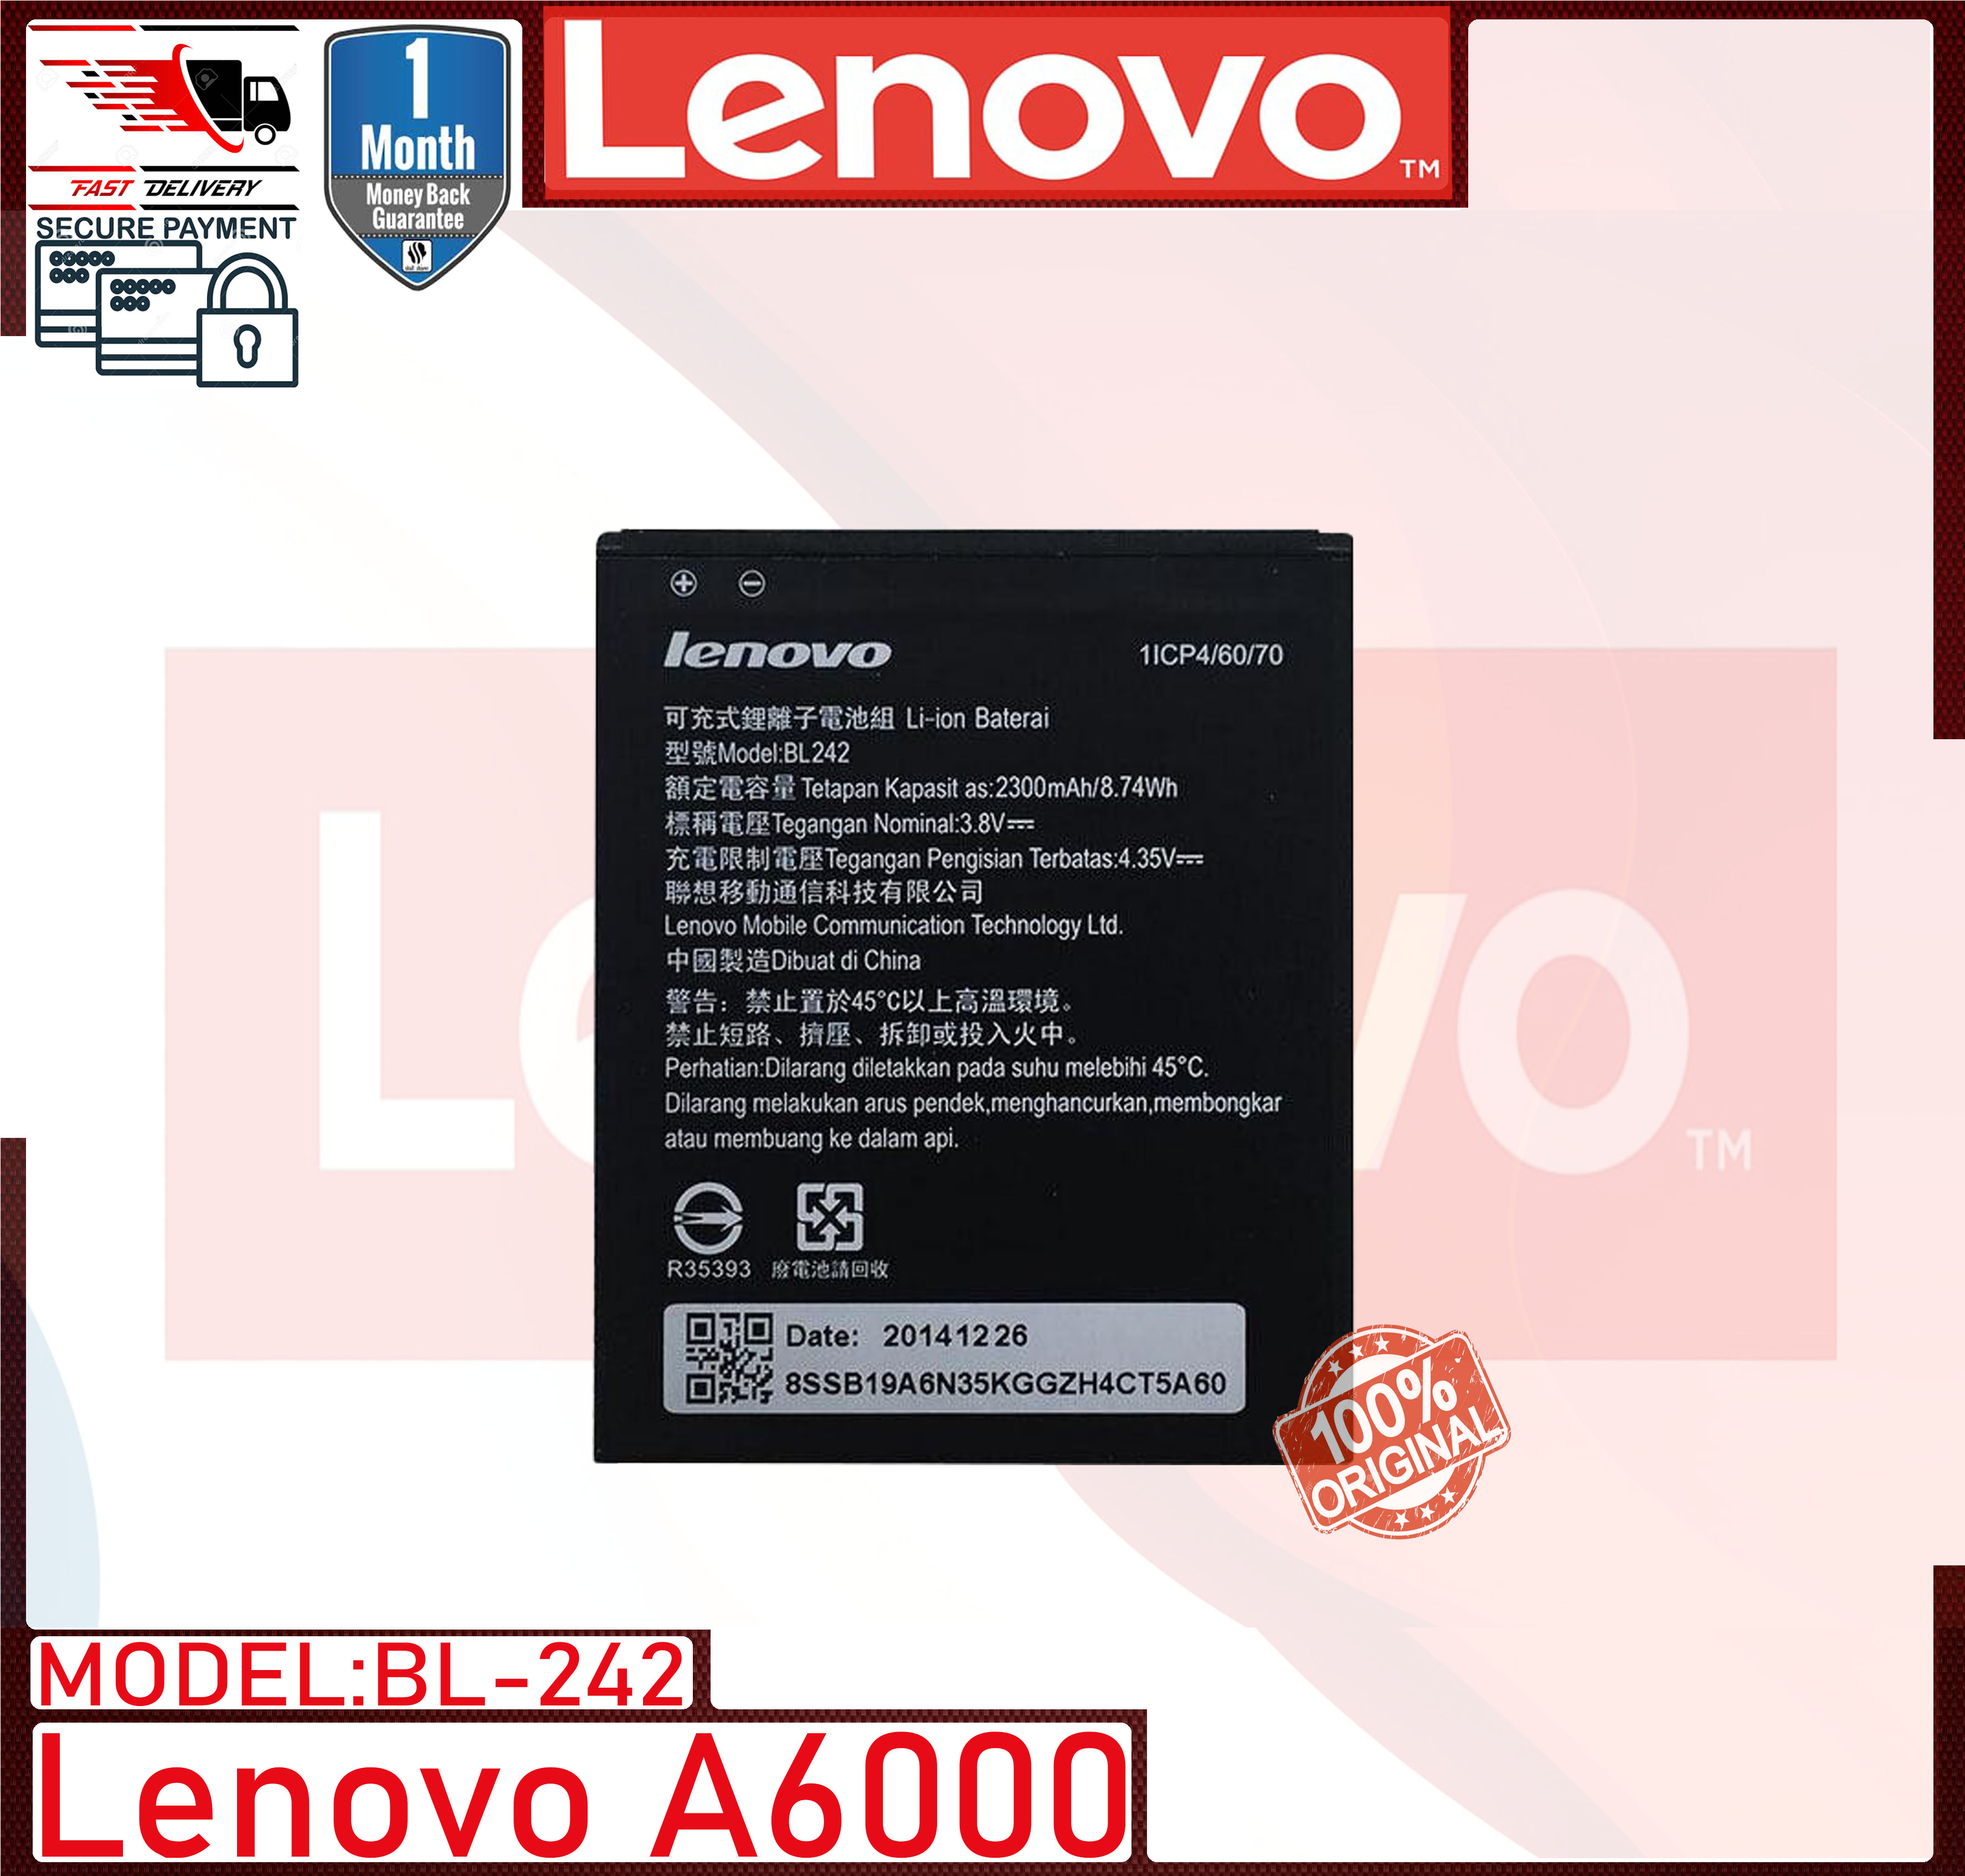 Buy Lenovo Mobile Accessories Online Lazada Com Ph